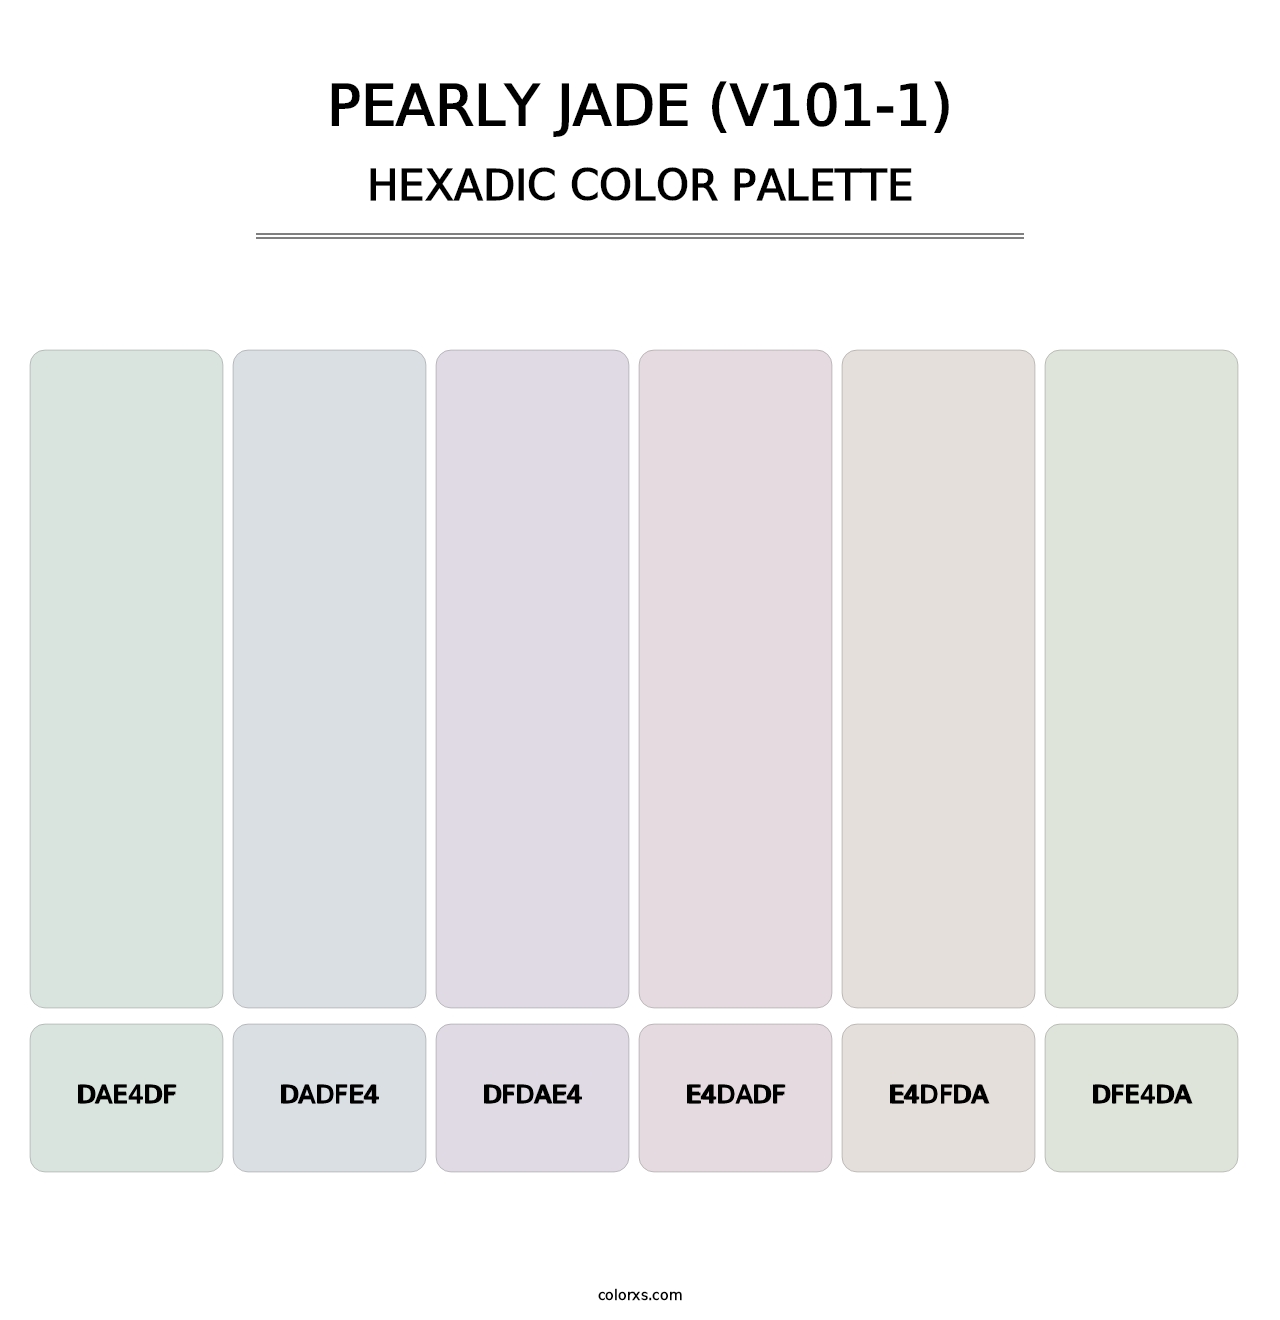 Pearly Jade (V101-1) - Hexadic Color Palette